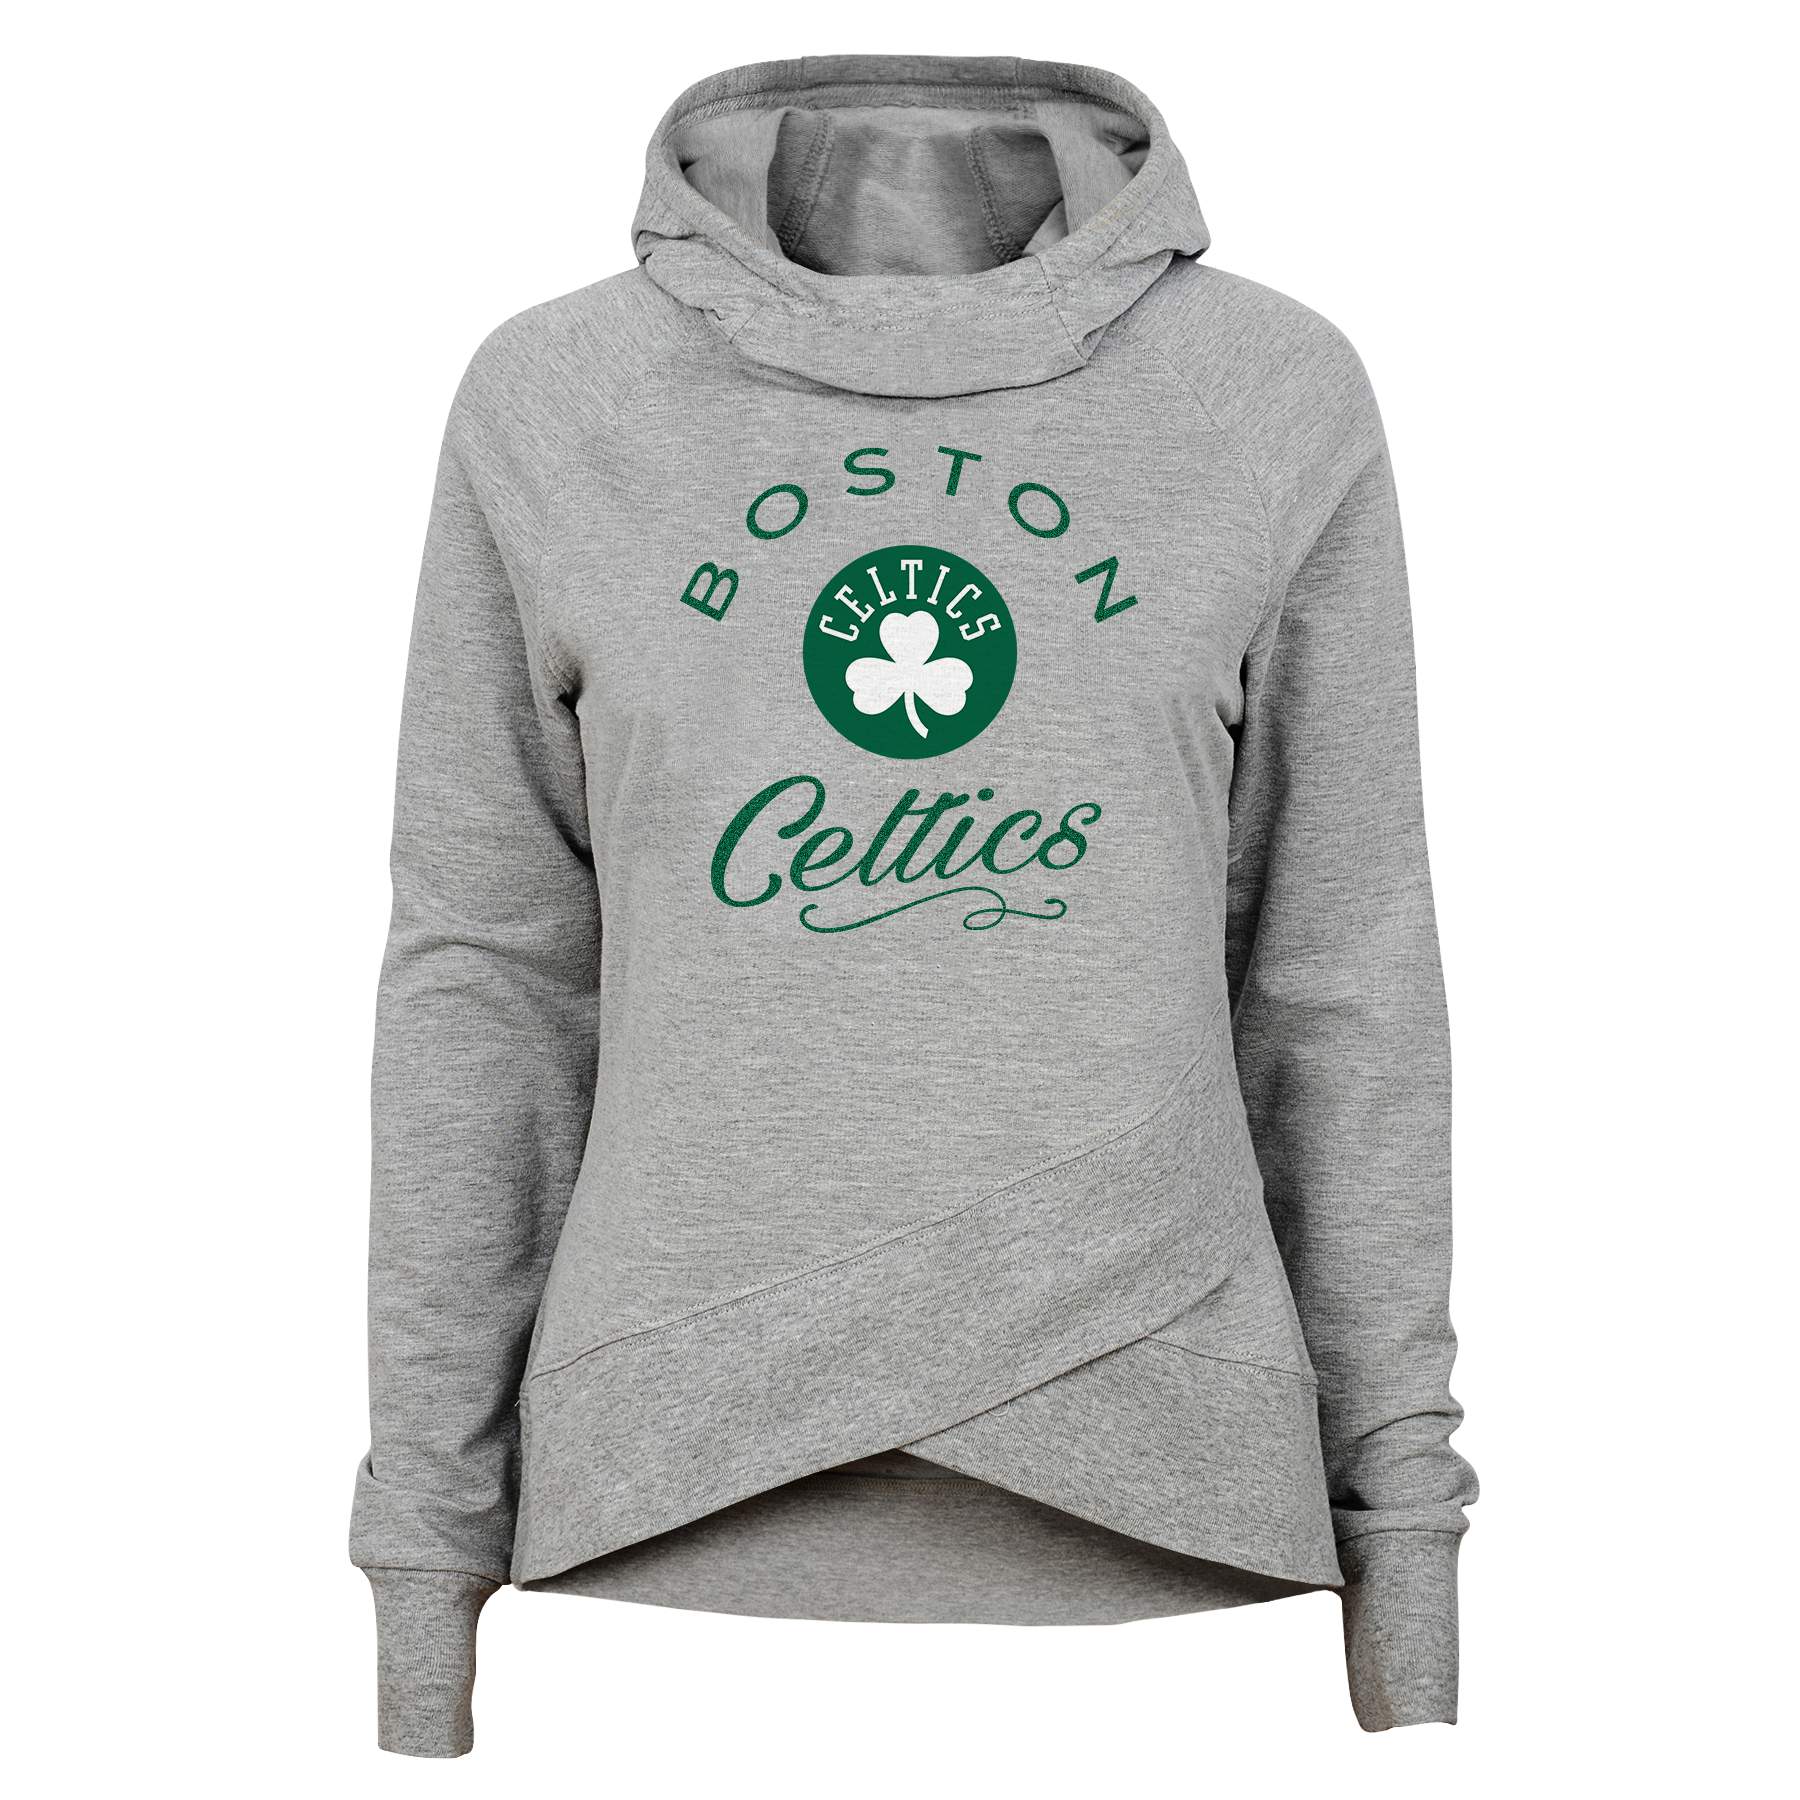 Boston Celtics Sweatshirts in Boston Celtics Team Shop 